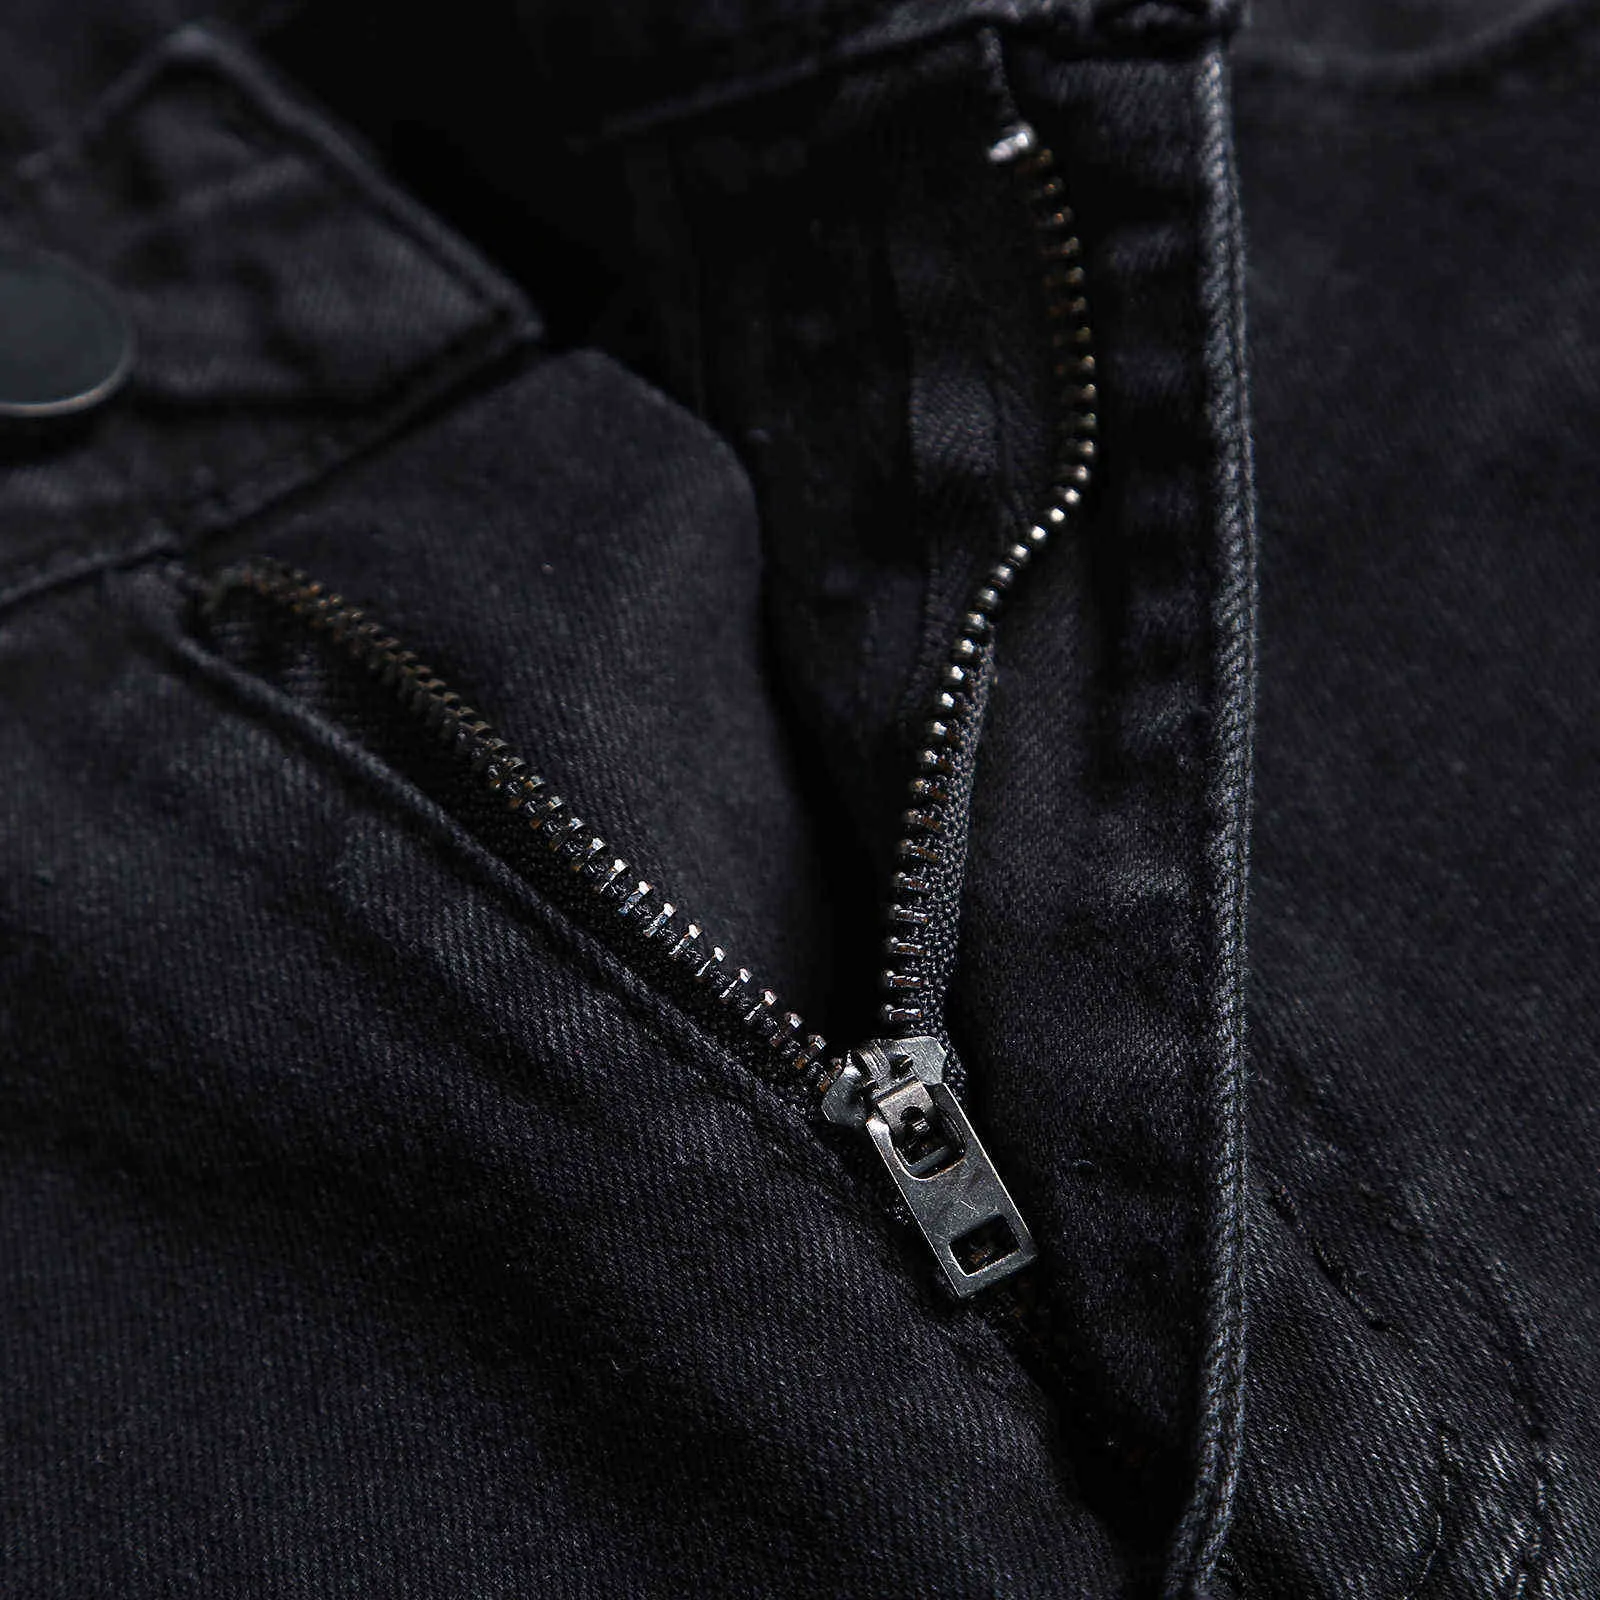 2020 2 Stil Erkekler Büyük Pocket Skinny Jeans Fermuar İnce Yüksek Kaliteli Kot Hasar Spor Korse Kot M-3XL H1116251R